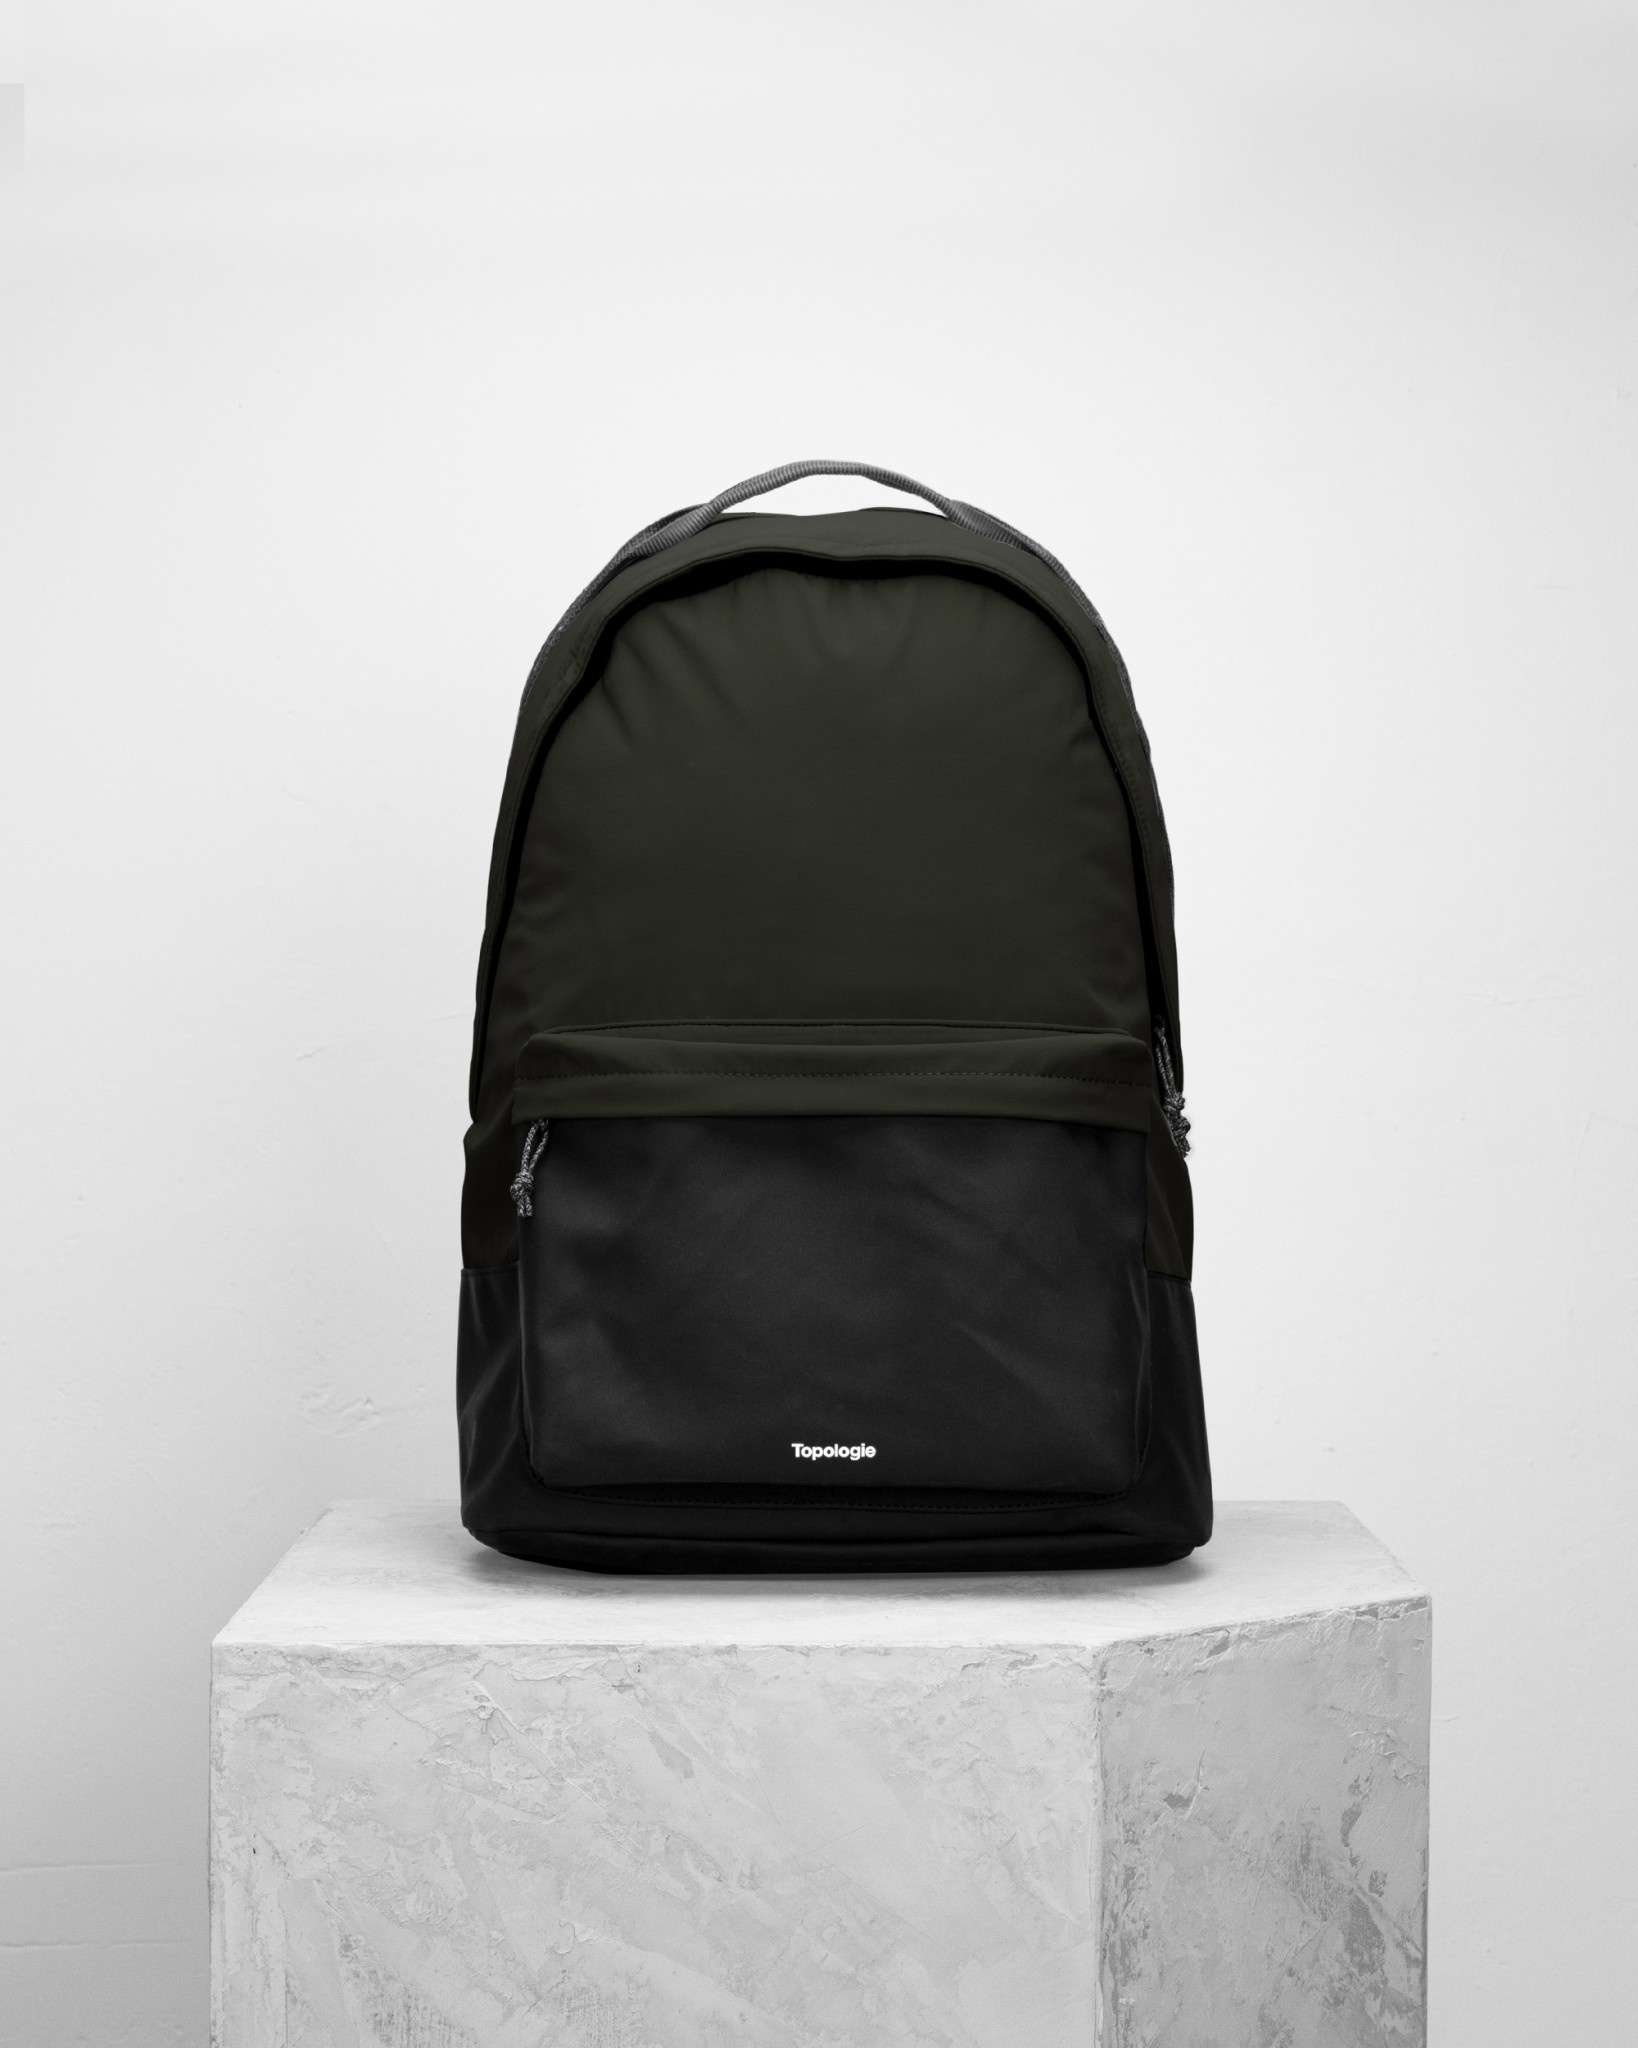 Topologie Block Backpack